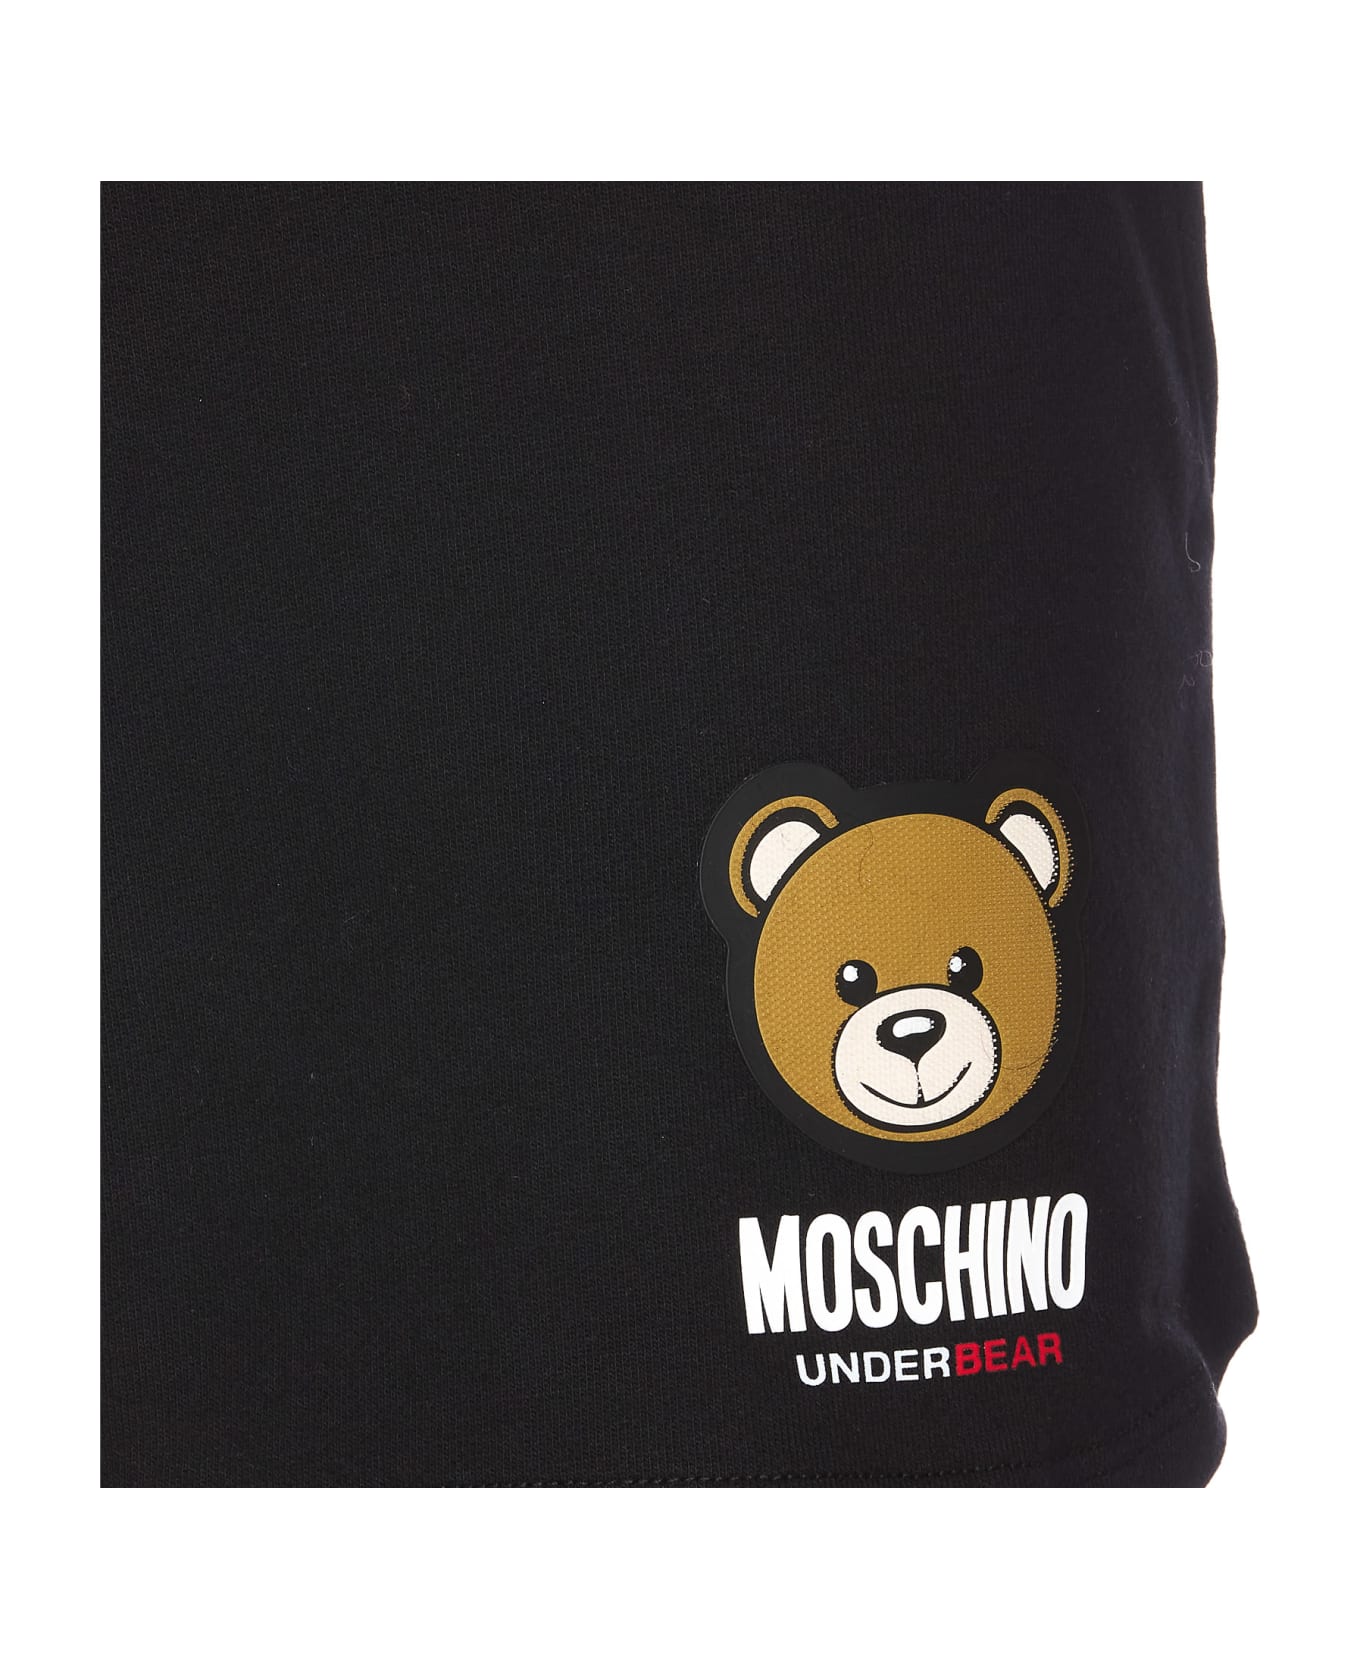 Moschino Underbear Shorts - Black